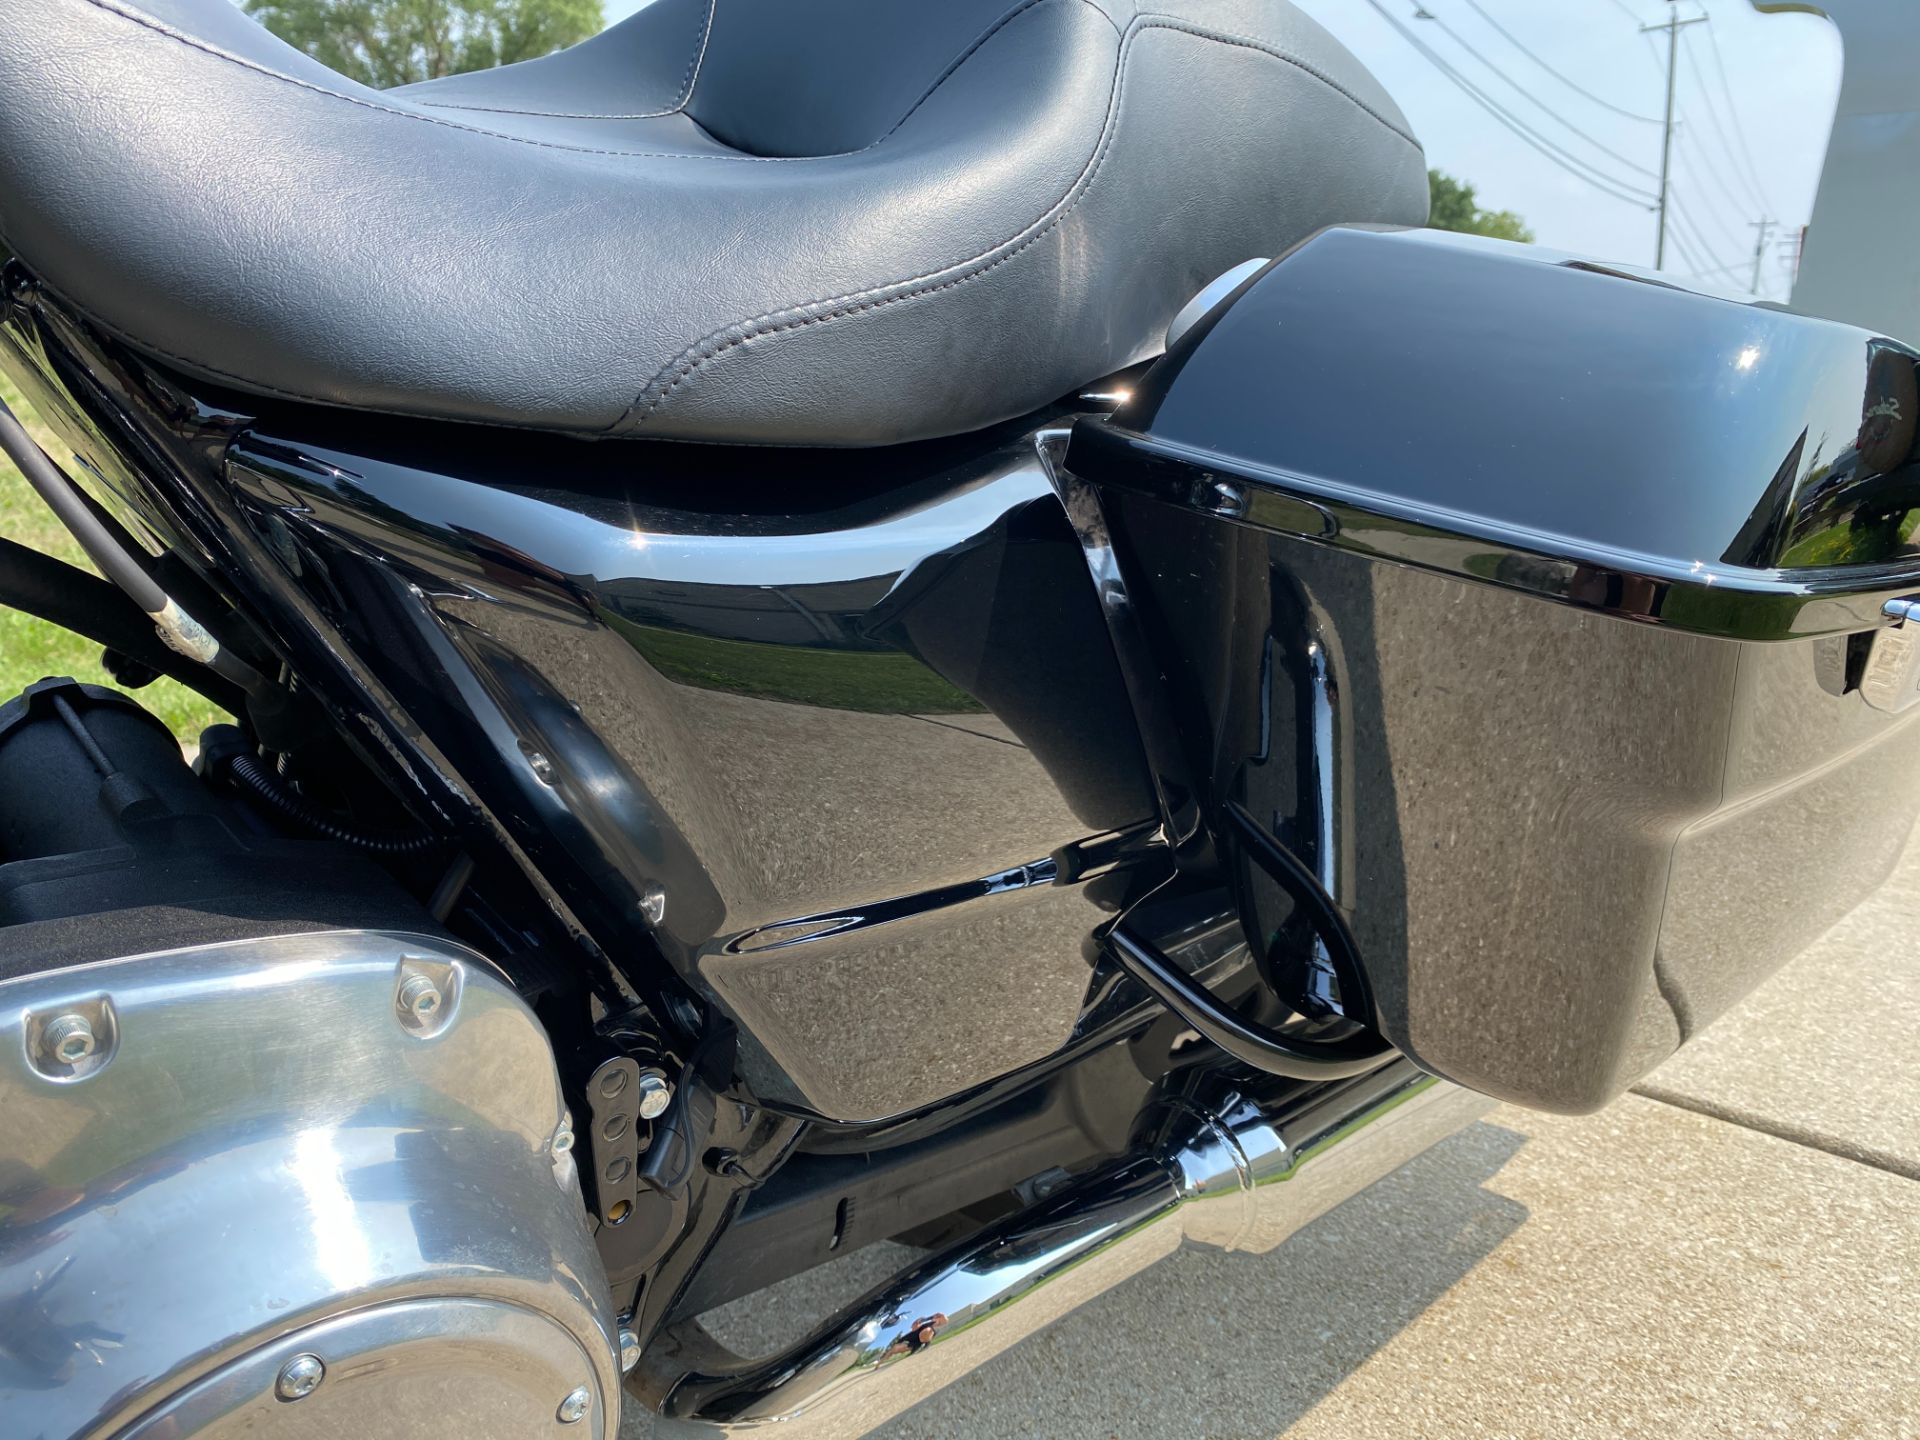 2020 Harley-Davidson Electra Glide® Standard in Big Bend, Wisconsin - Photo 23